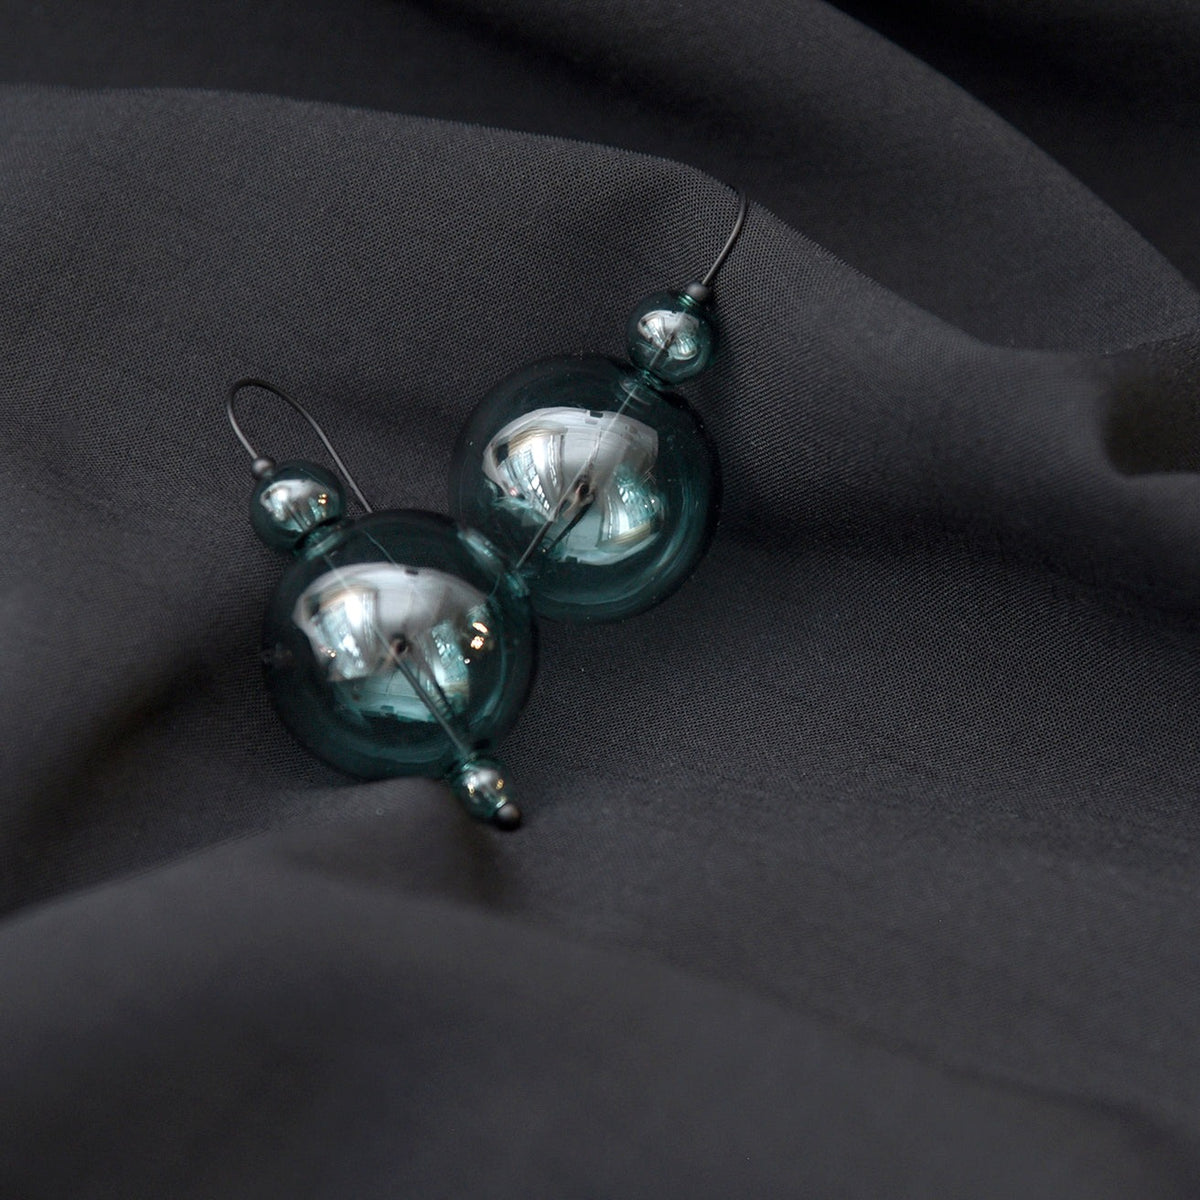 Earrings on dark cloth background.